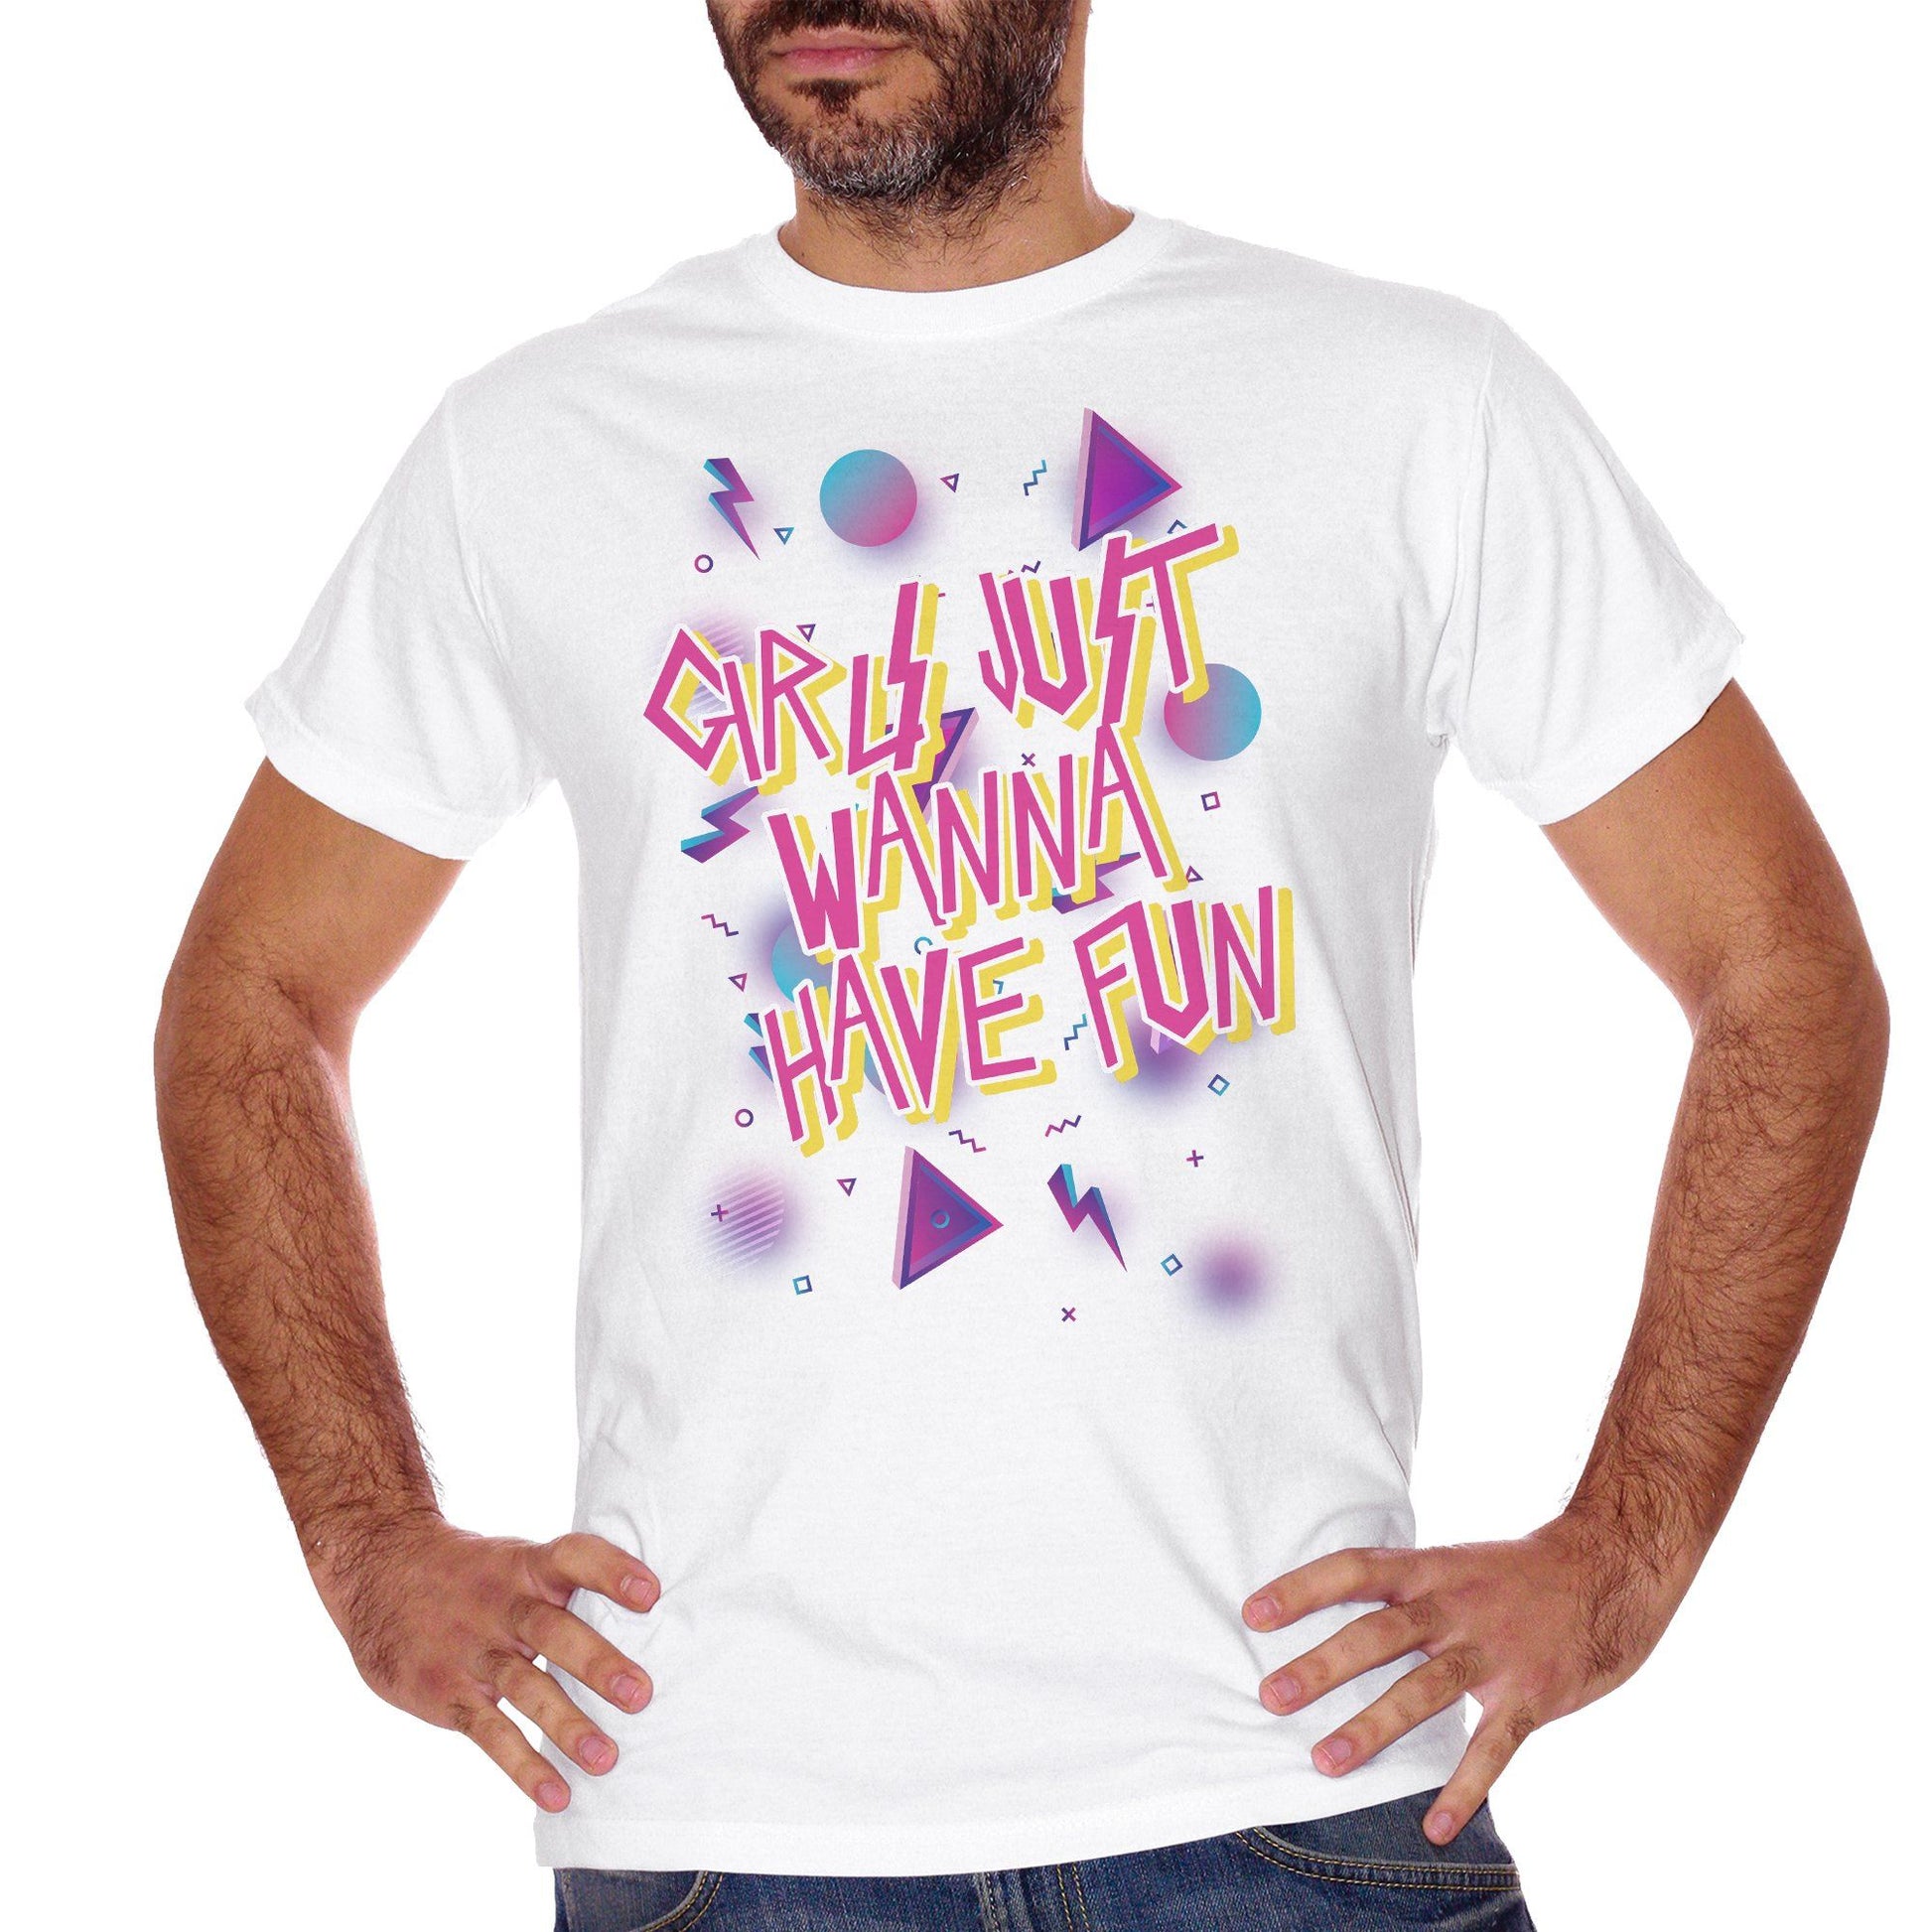 Lavender T-Shirt 80S Cindy Lauper Girls musica anni 80 - Girls just wanna have fun - Music Choose ur color CucShop